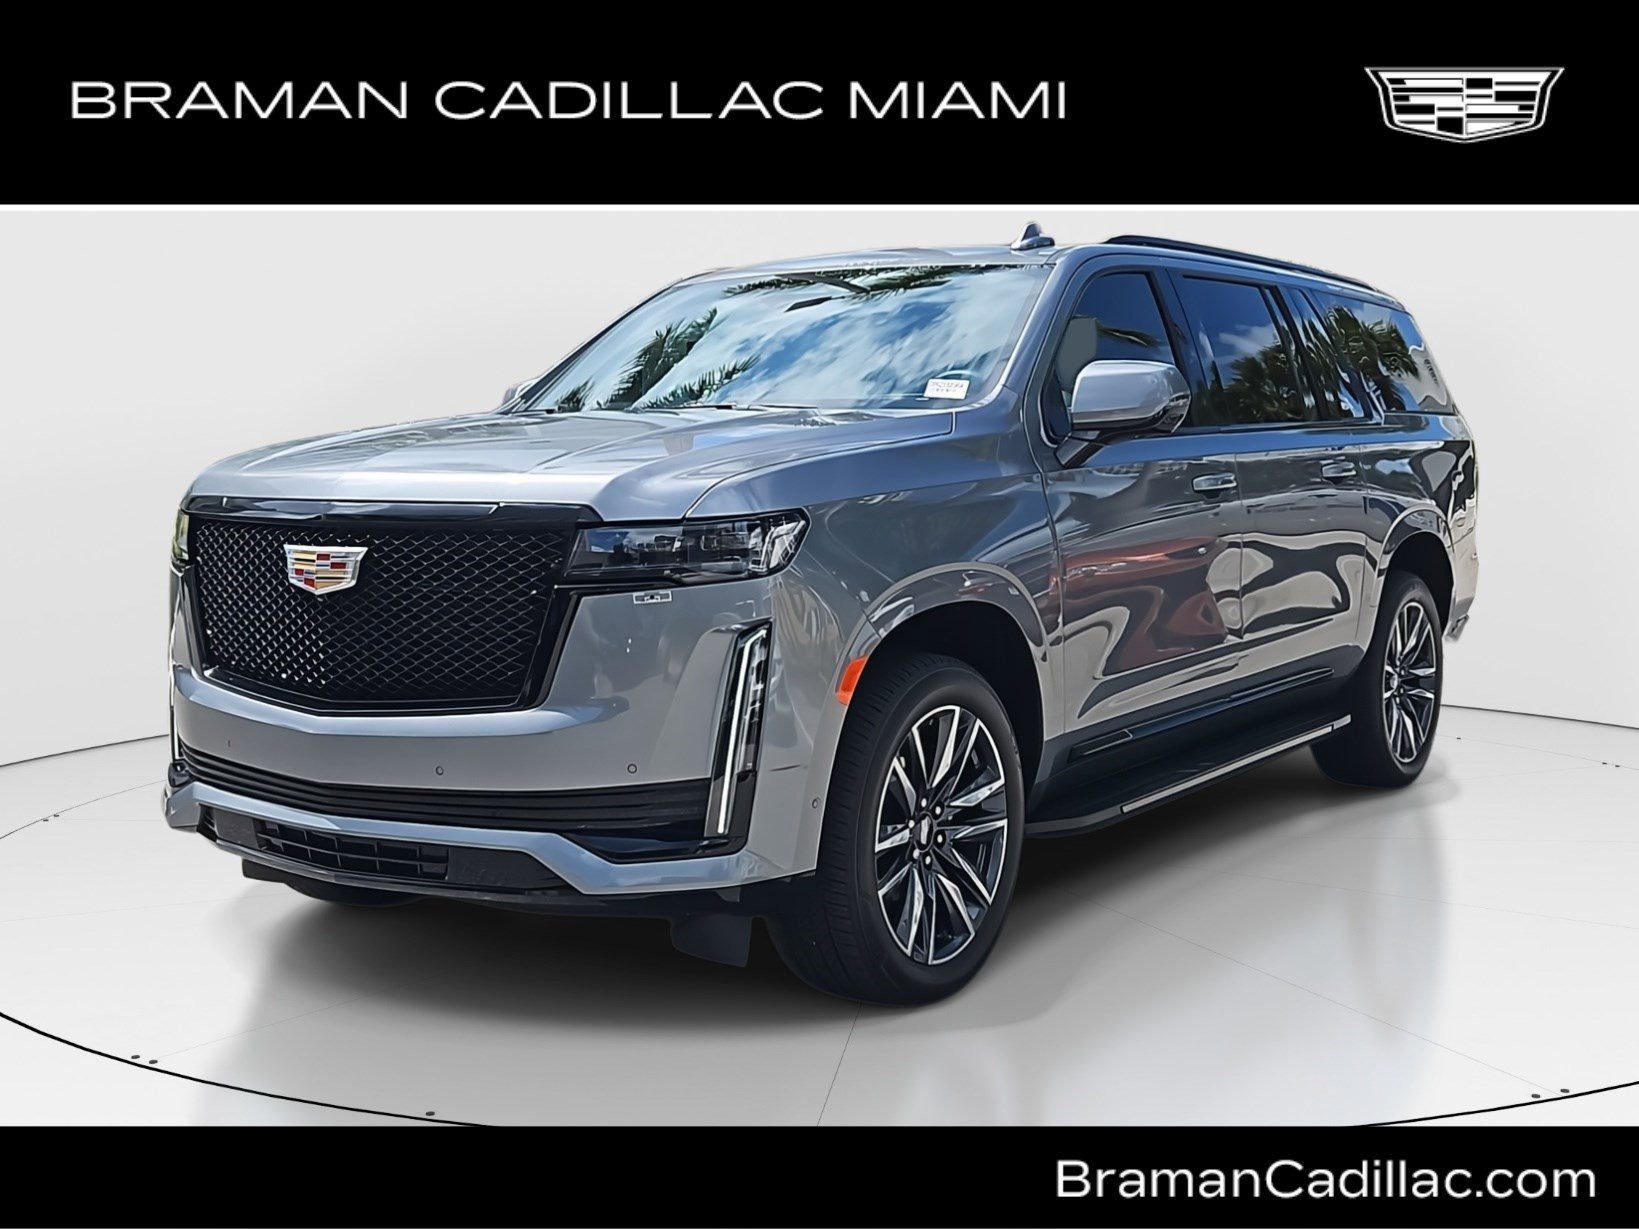 2022 Cadillac Escalade Miami FL